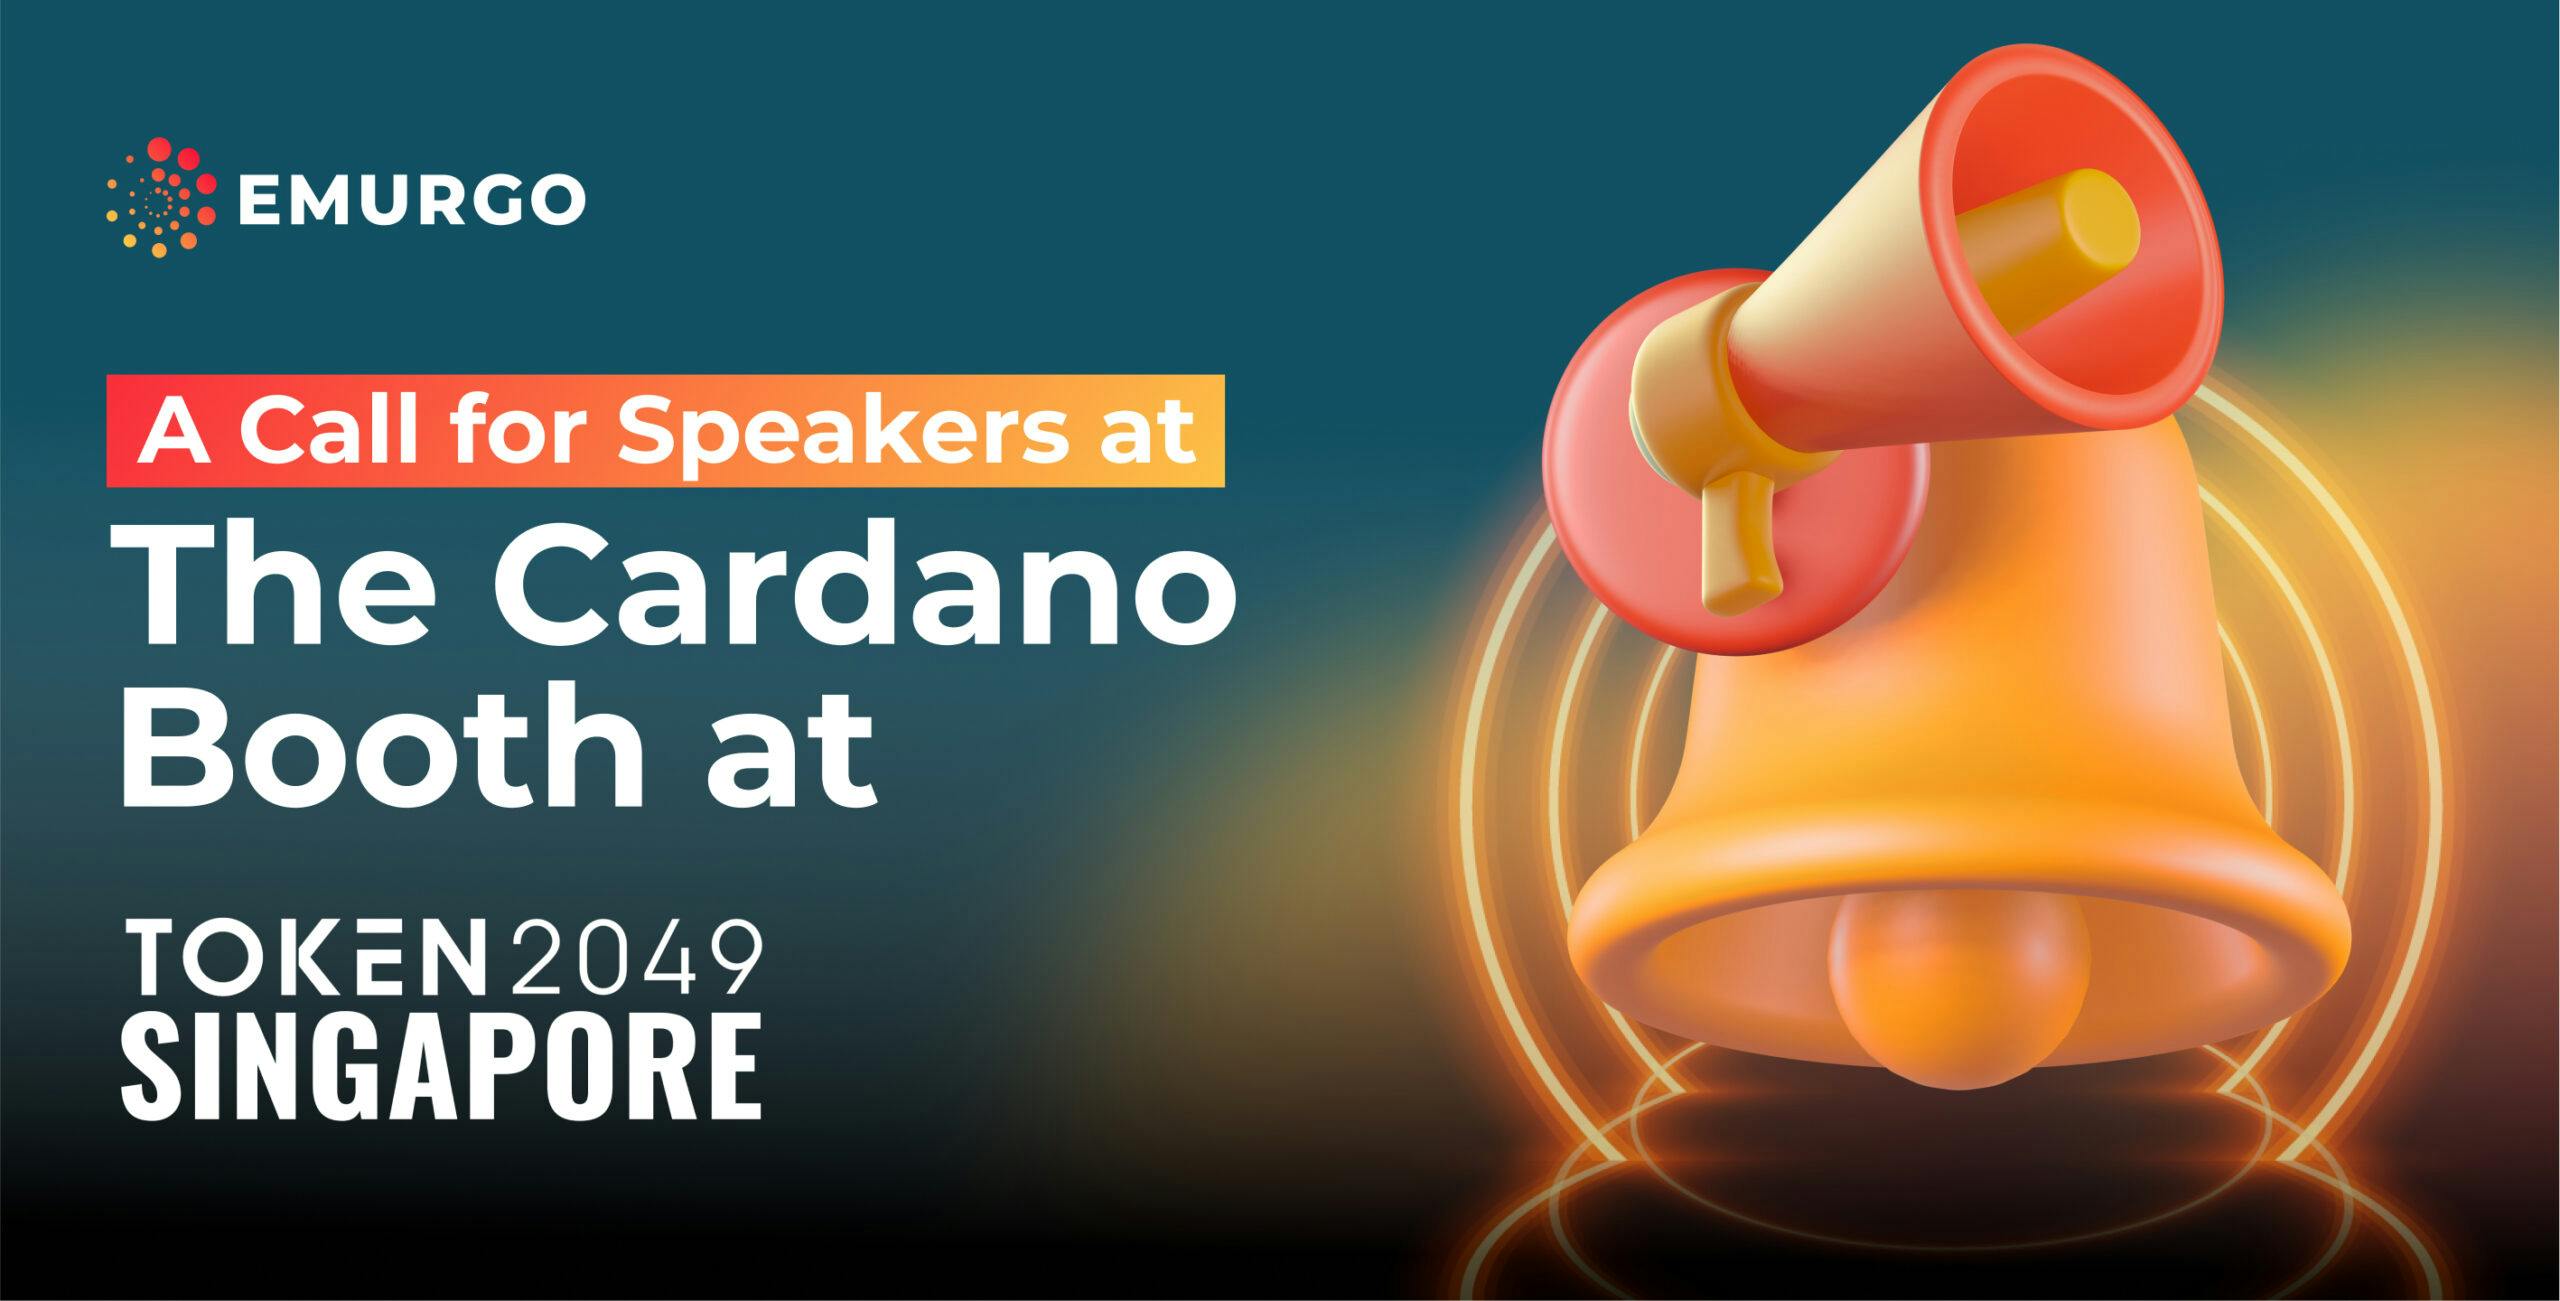 Speaker-Applications-for-Cardano-EMURGO-Booth-at-TOKEN2049-Singapore-1-scaled-1.jpg